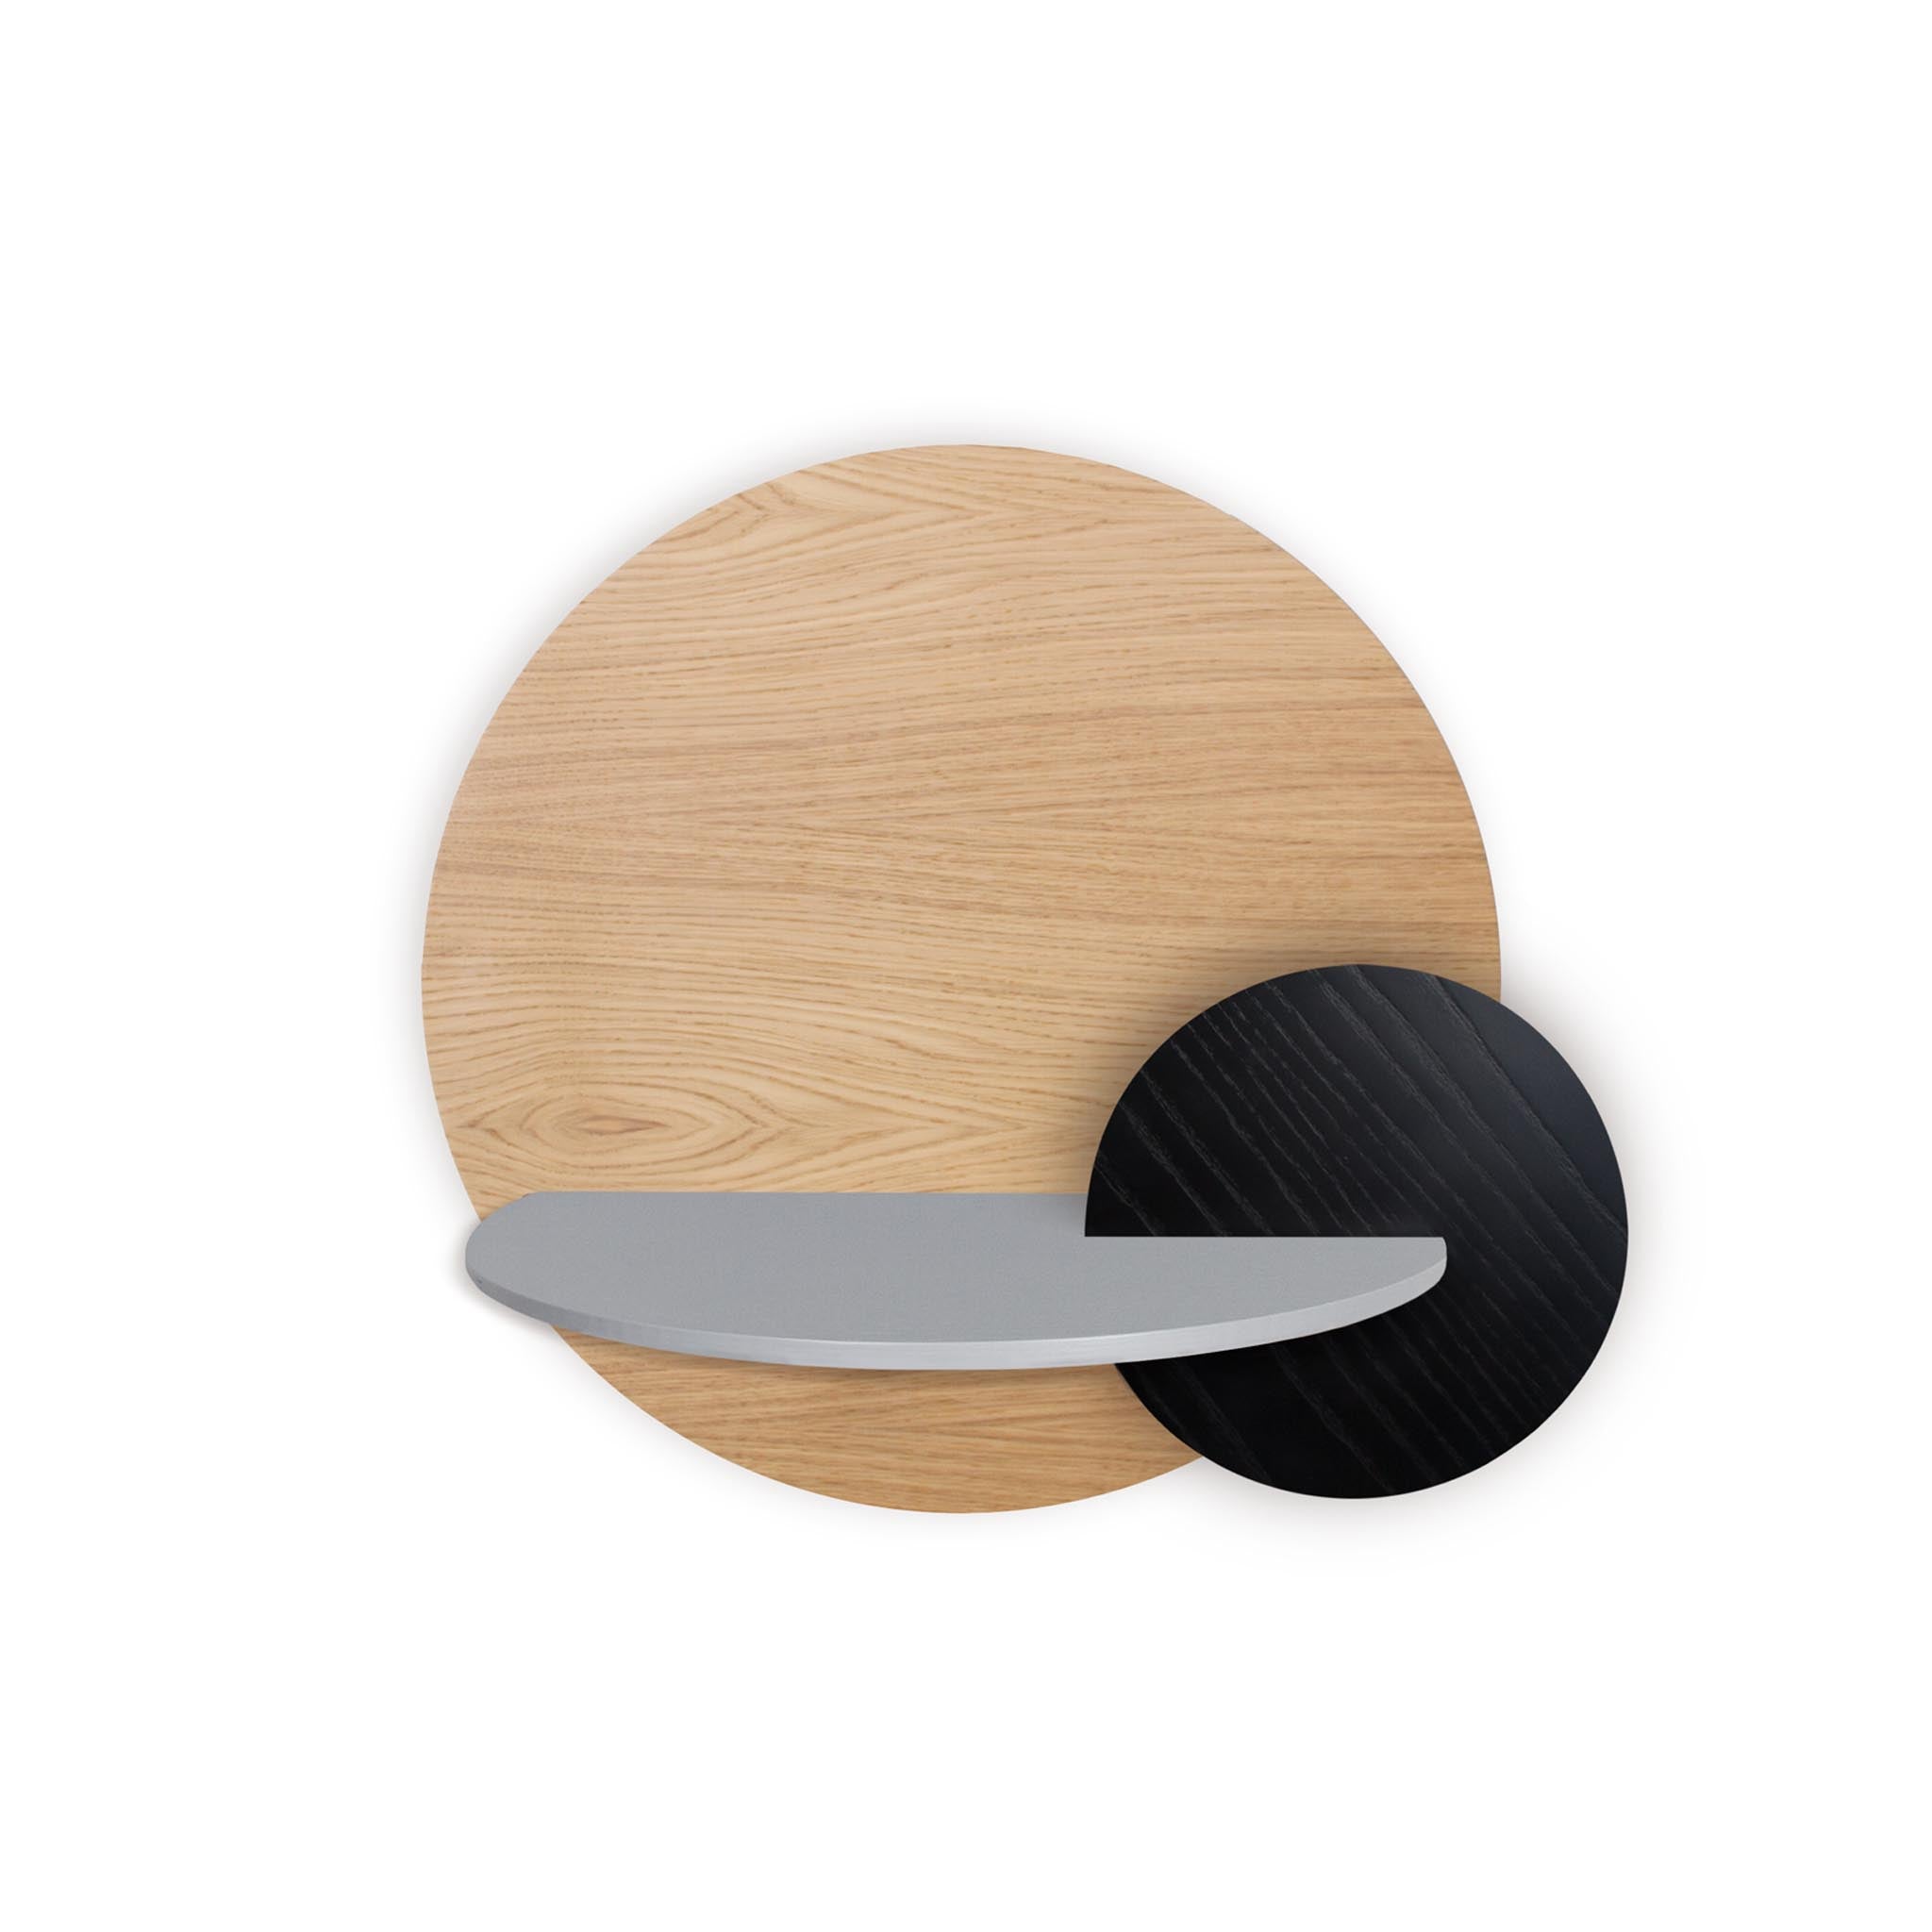 Alba floating nightstand · Oak circle